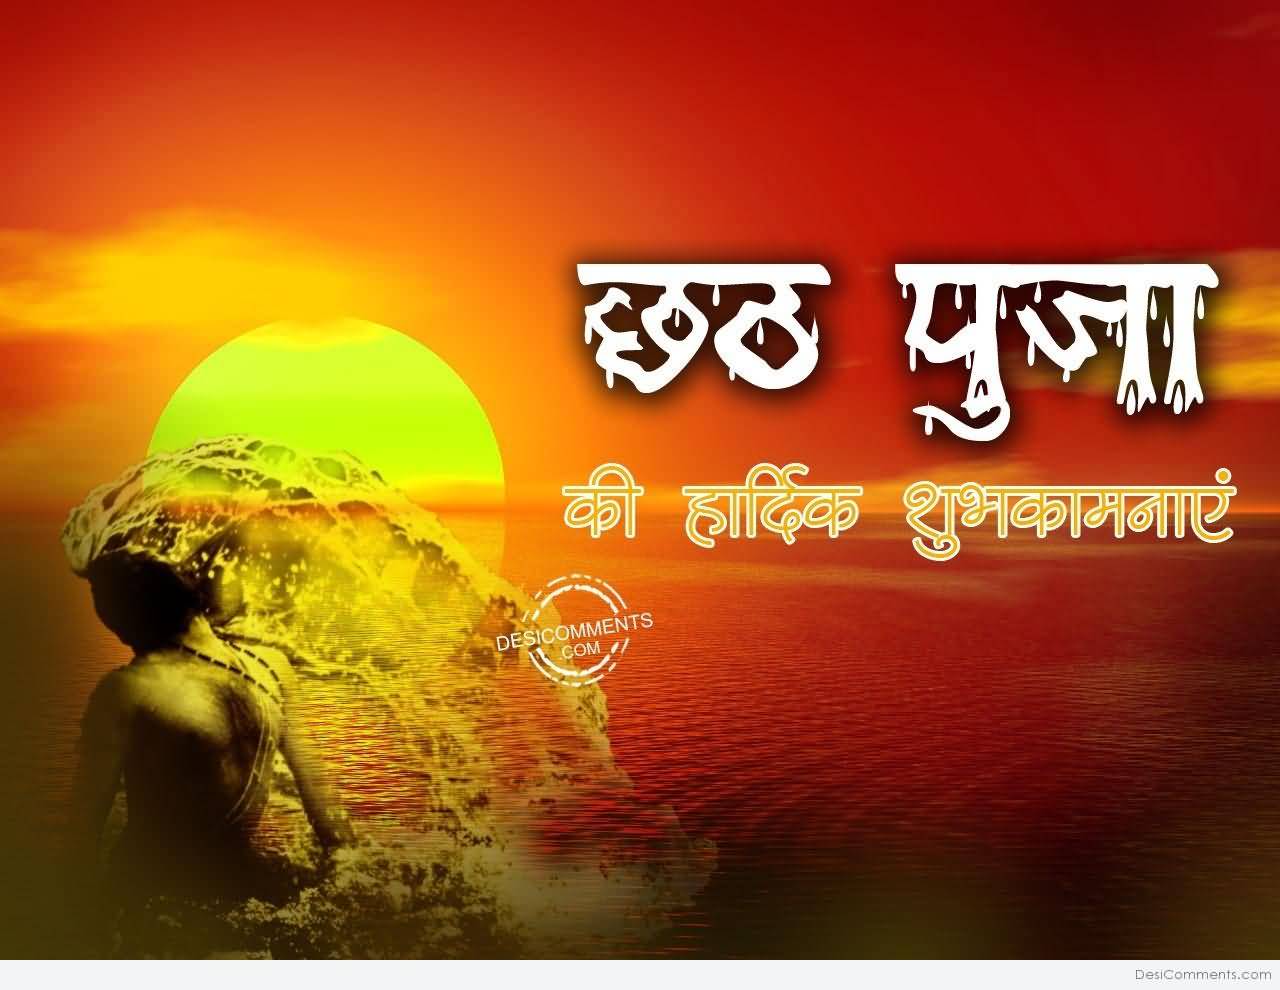 Happy Chhath Puja Images